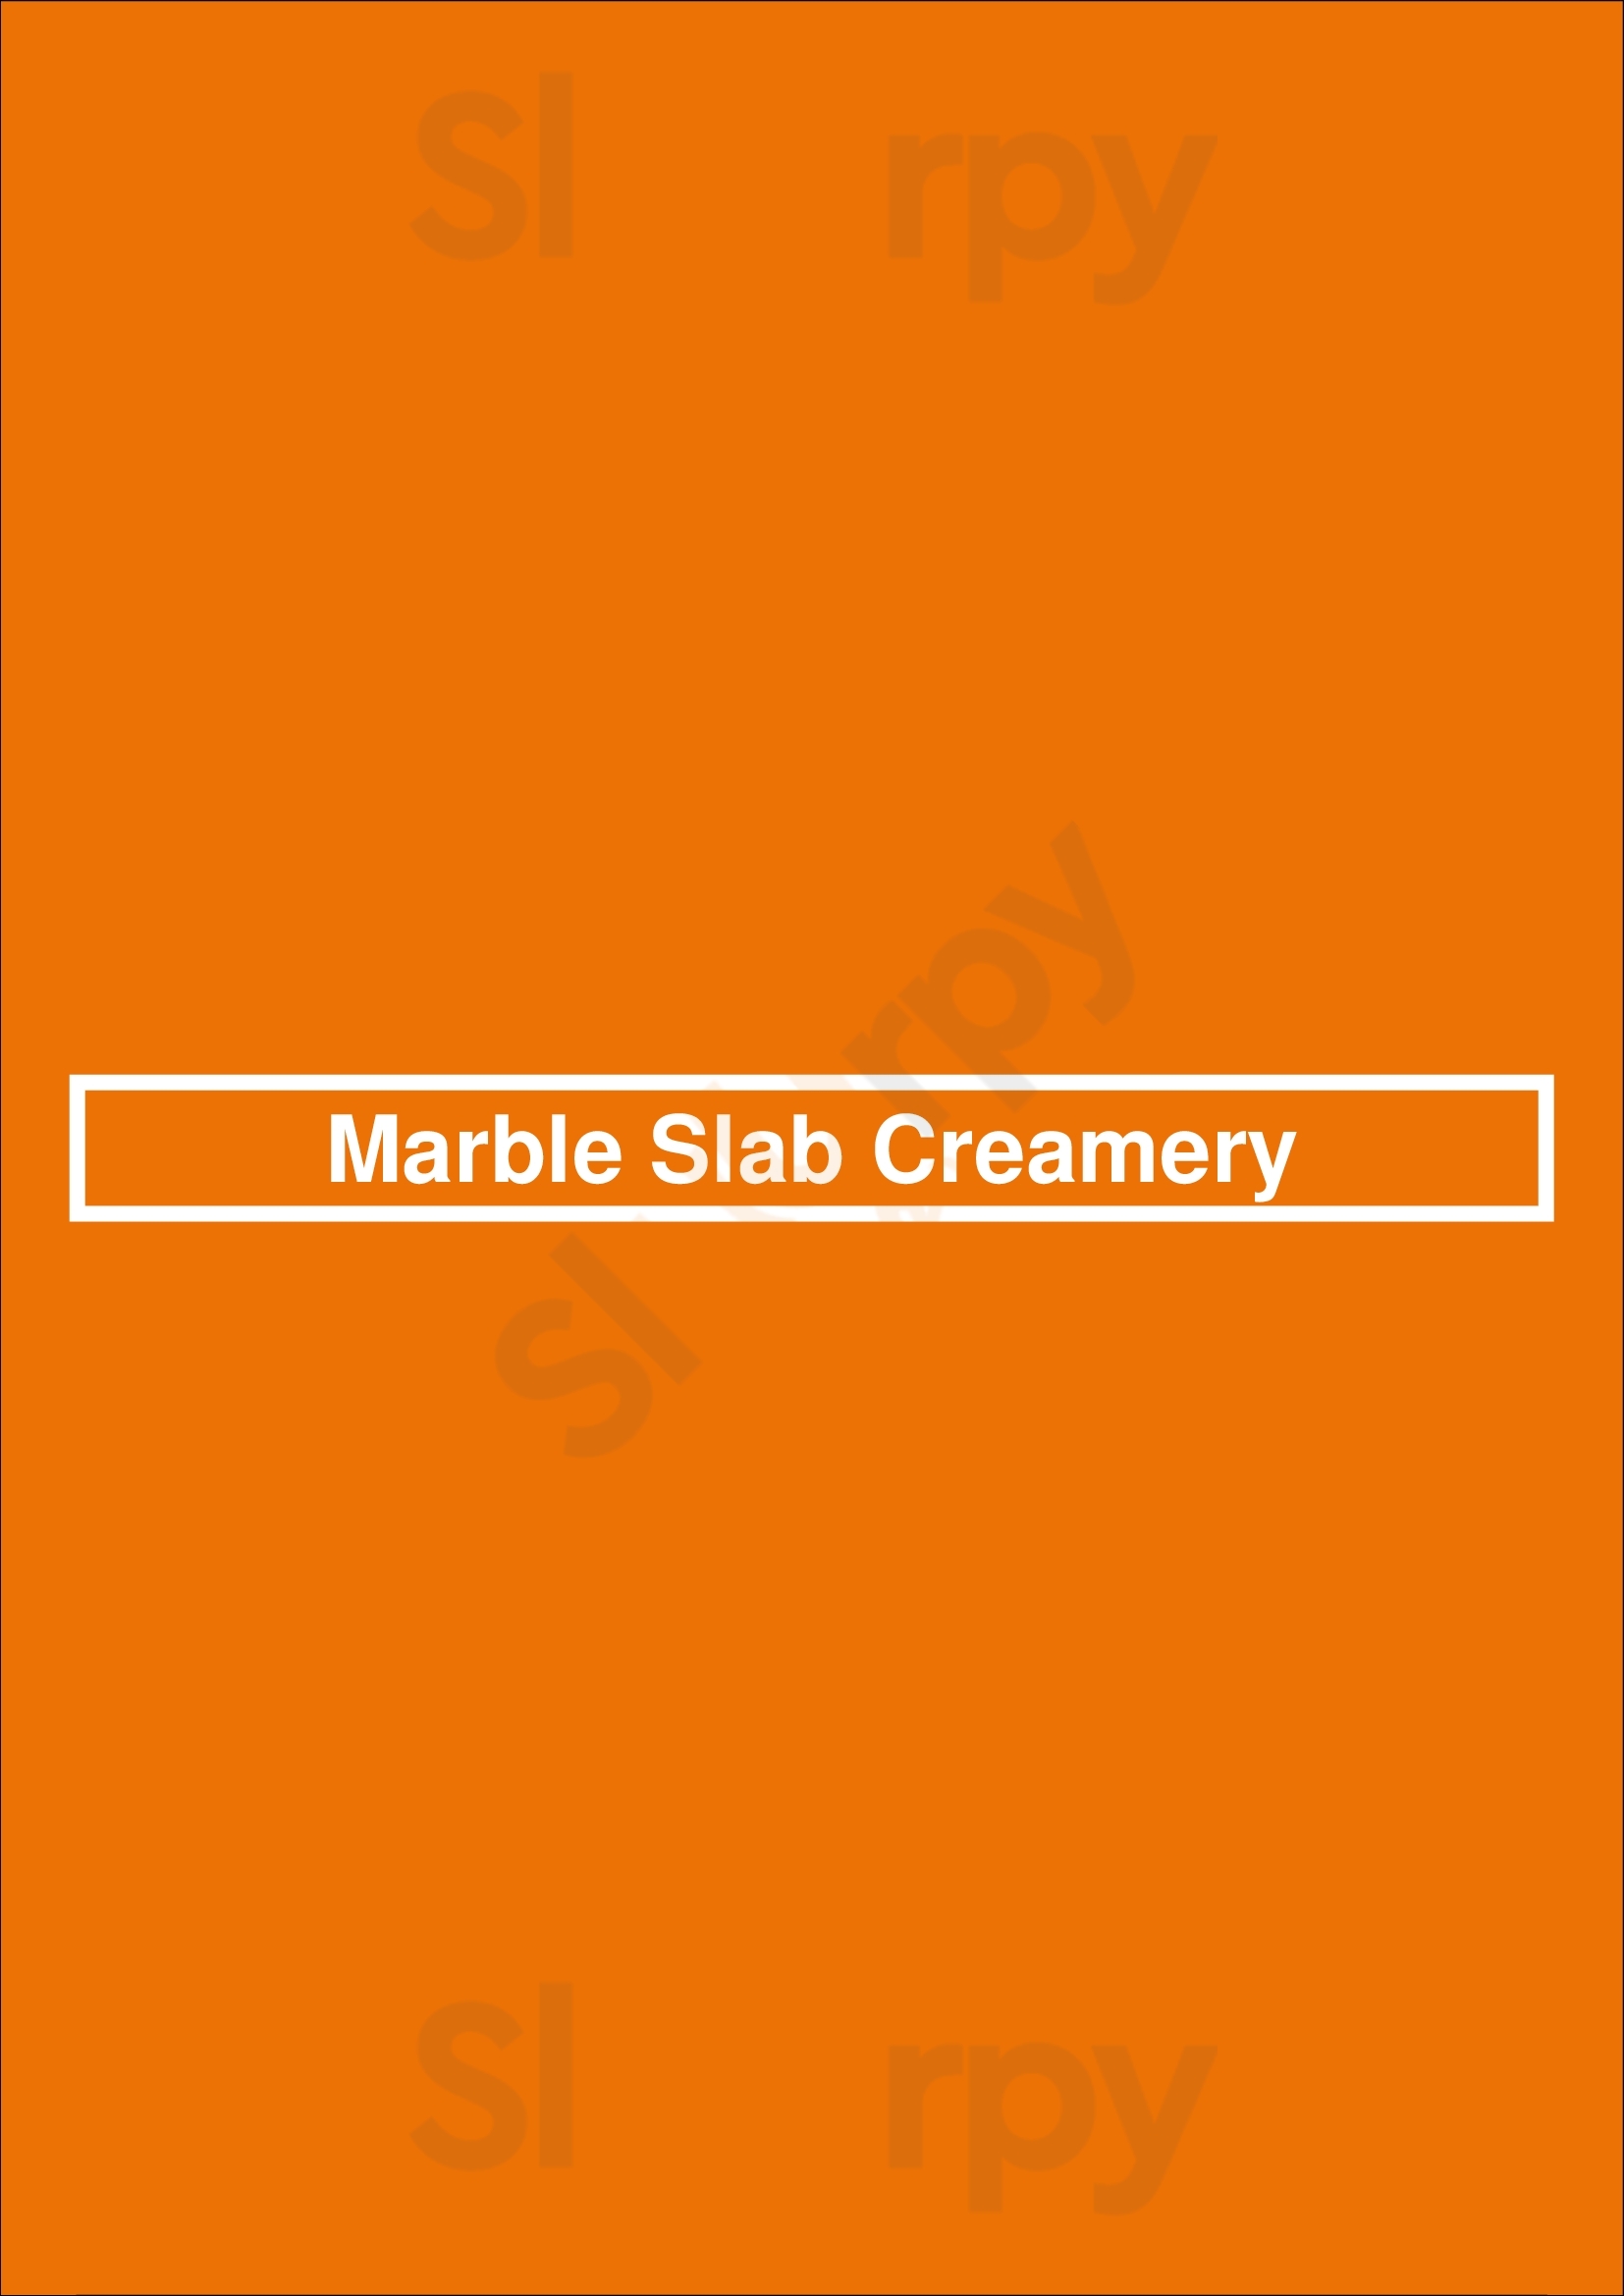 Marble Slab Creamery London Menu - 1